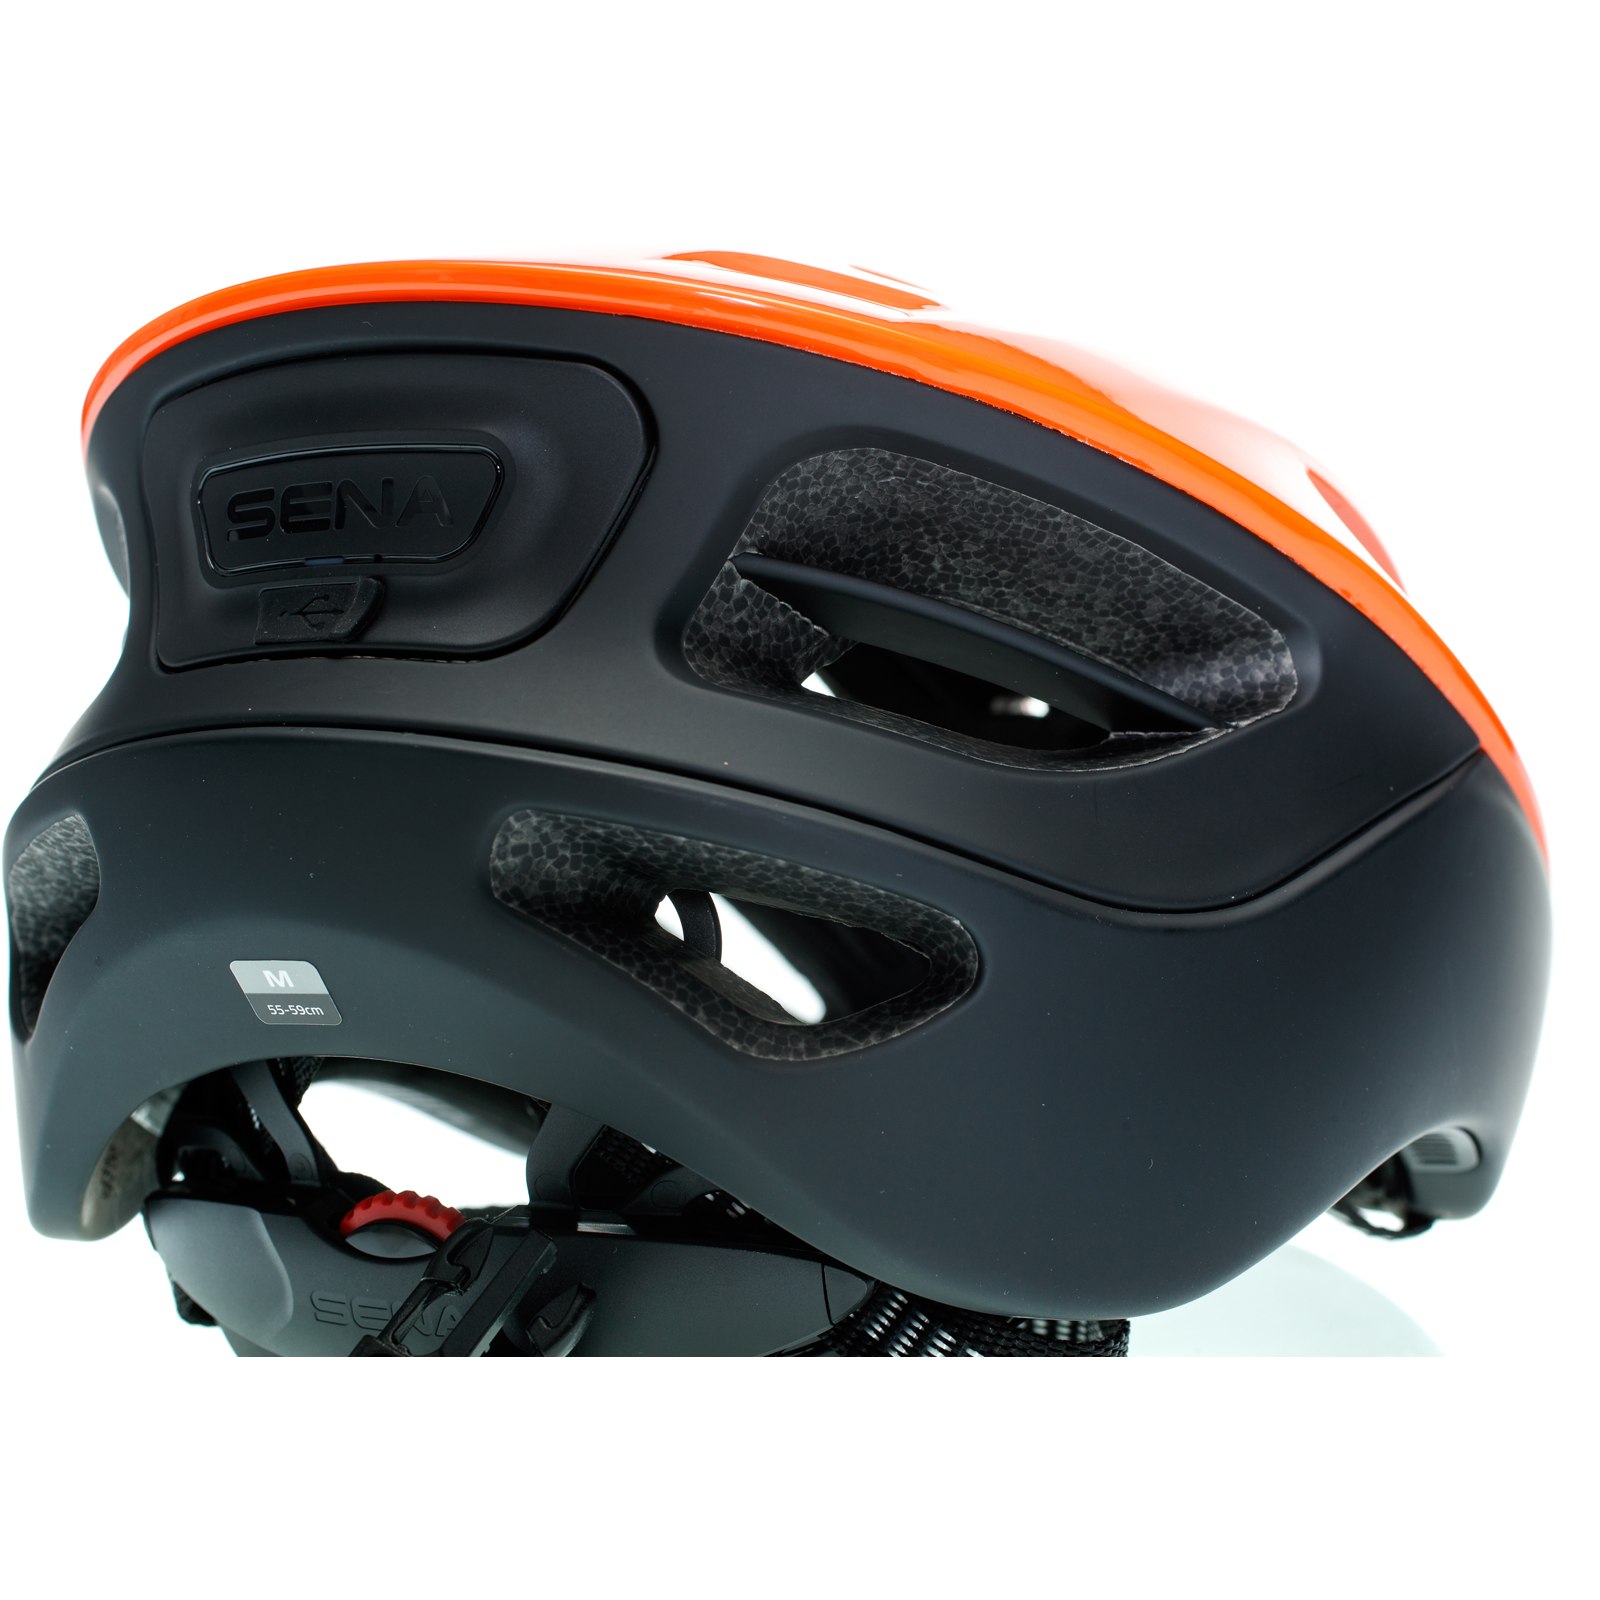 SENA R1 Smart Casque Vélo - sans Radio FM - Electric Tangerine